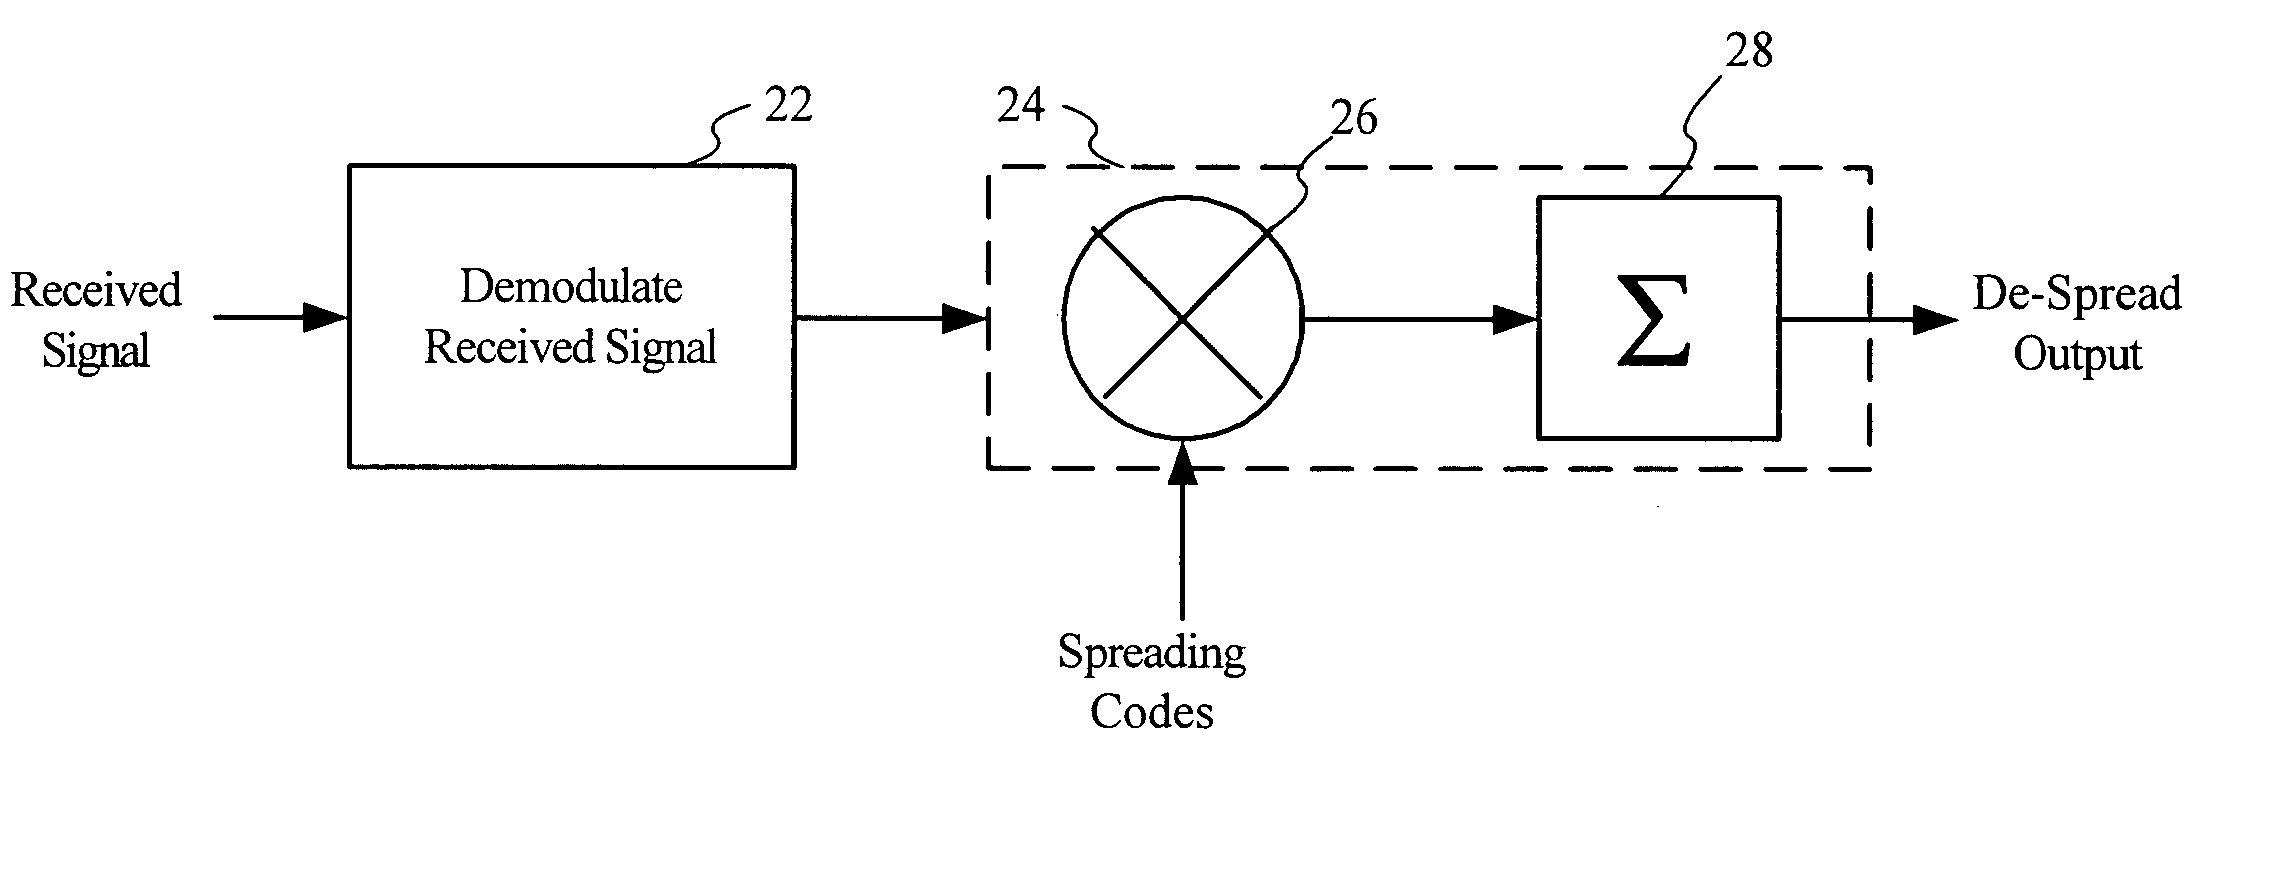 Chip-to-symbol receiver despreader architechtures and methods for despreading spread spectrum signals